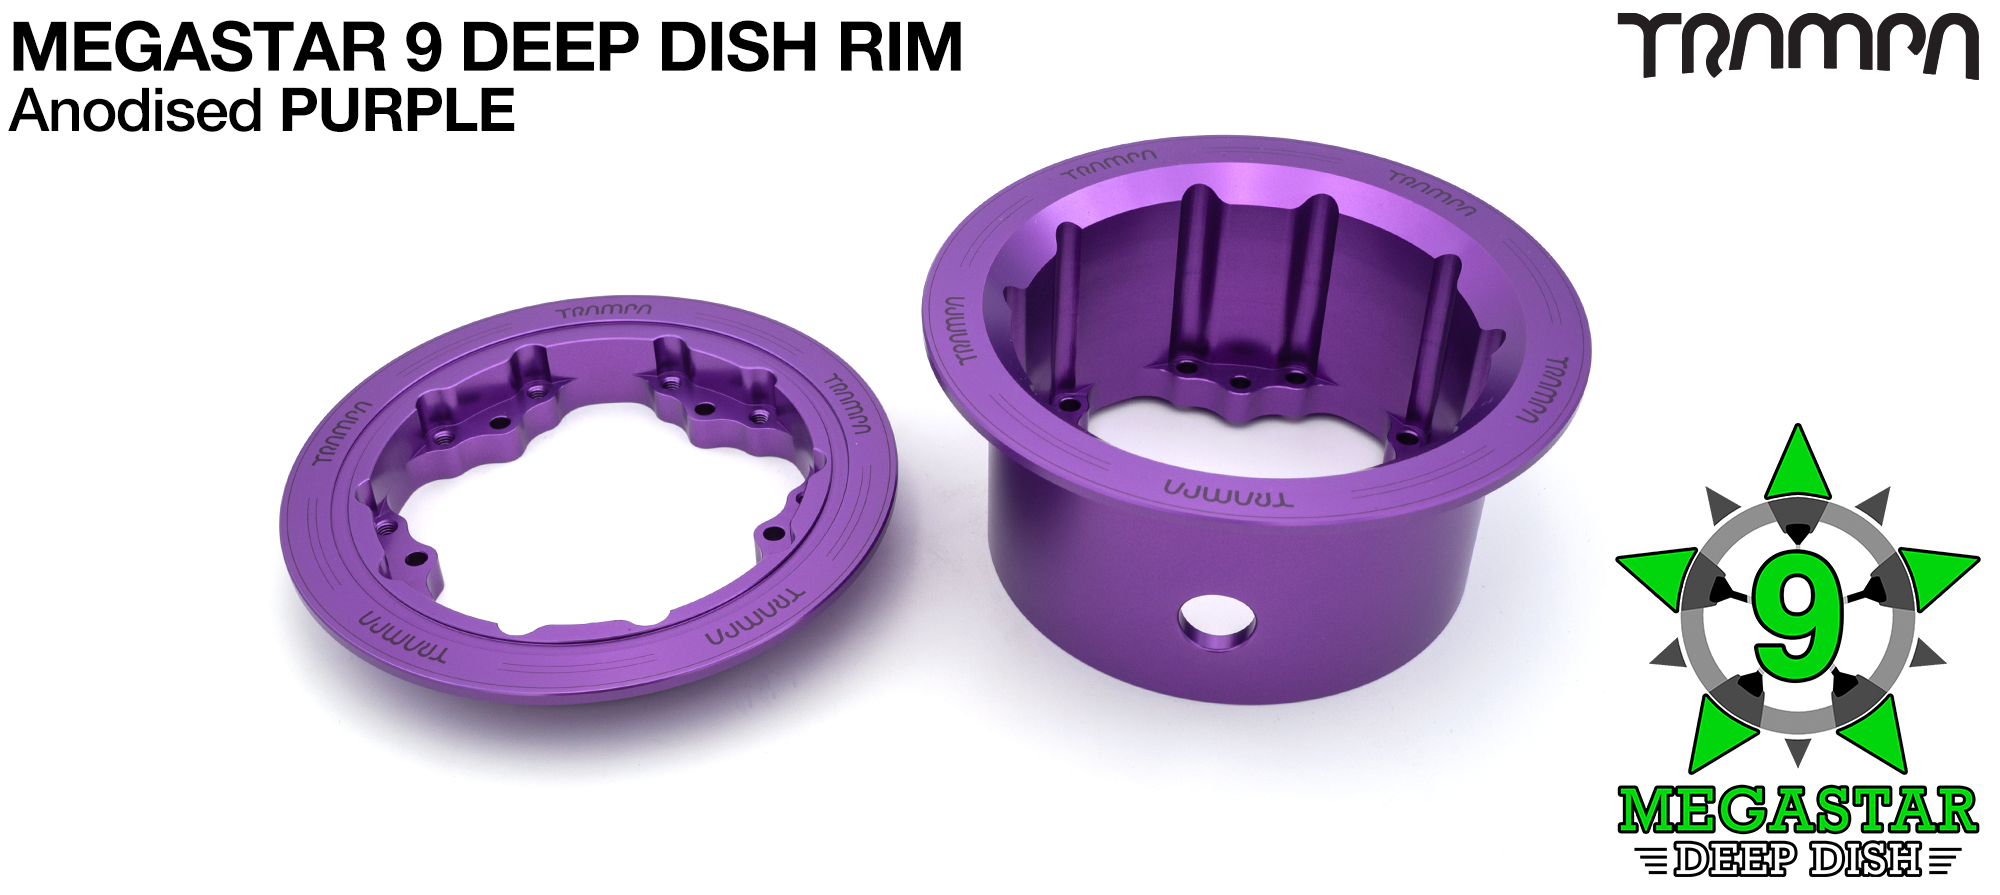 DEEP-DISH MEGASTAR 9 Rims - PURPLE 